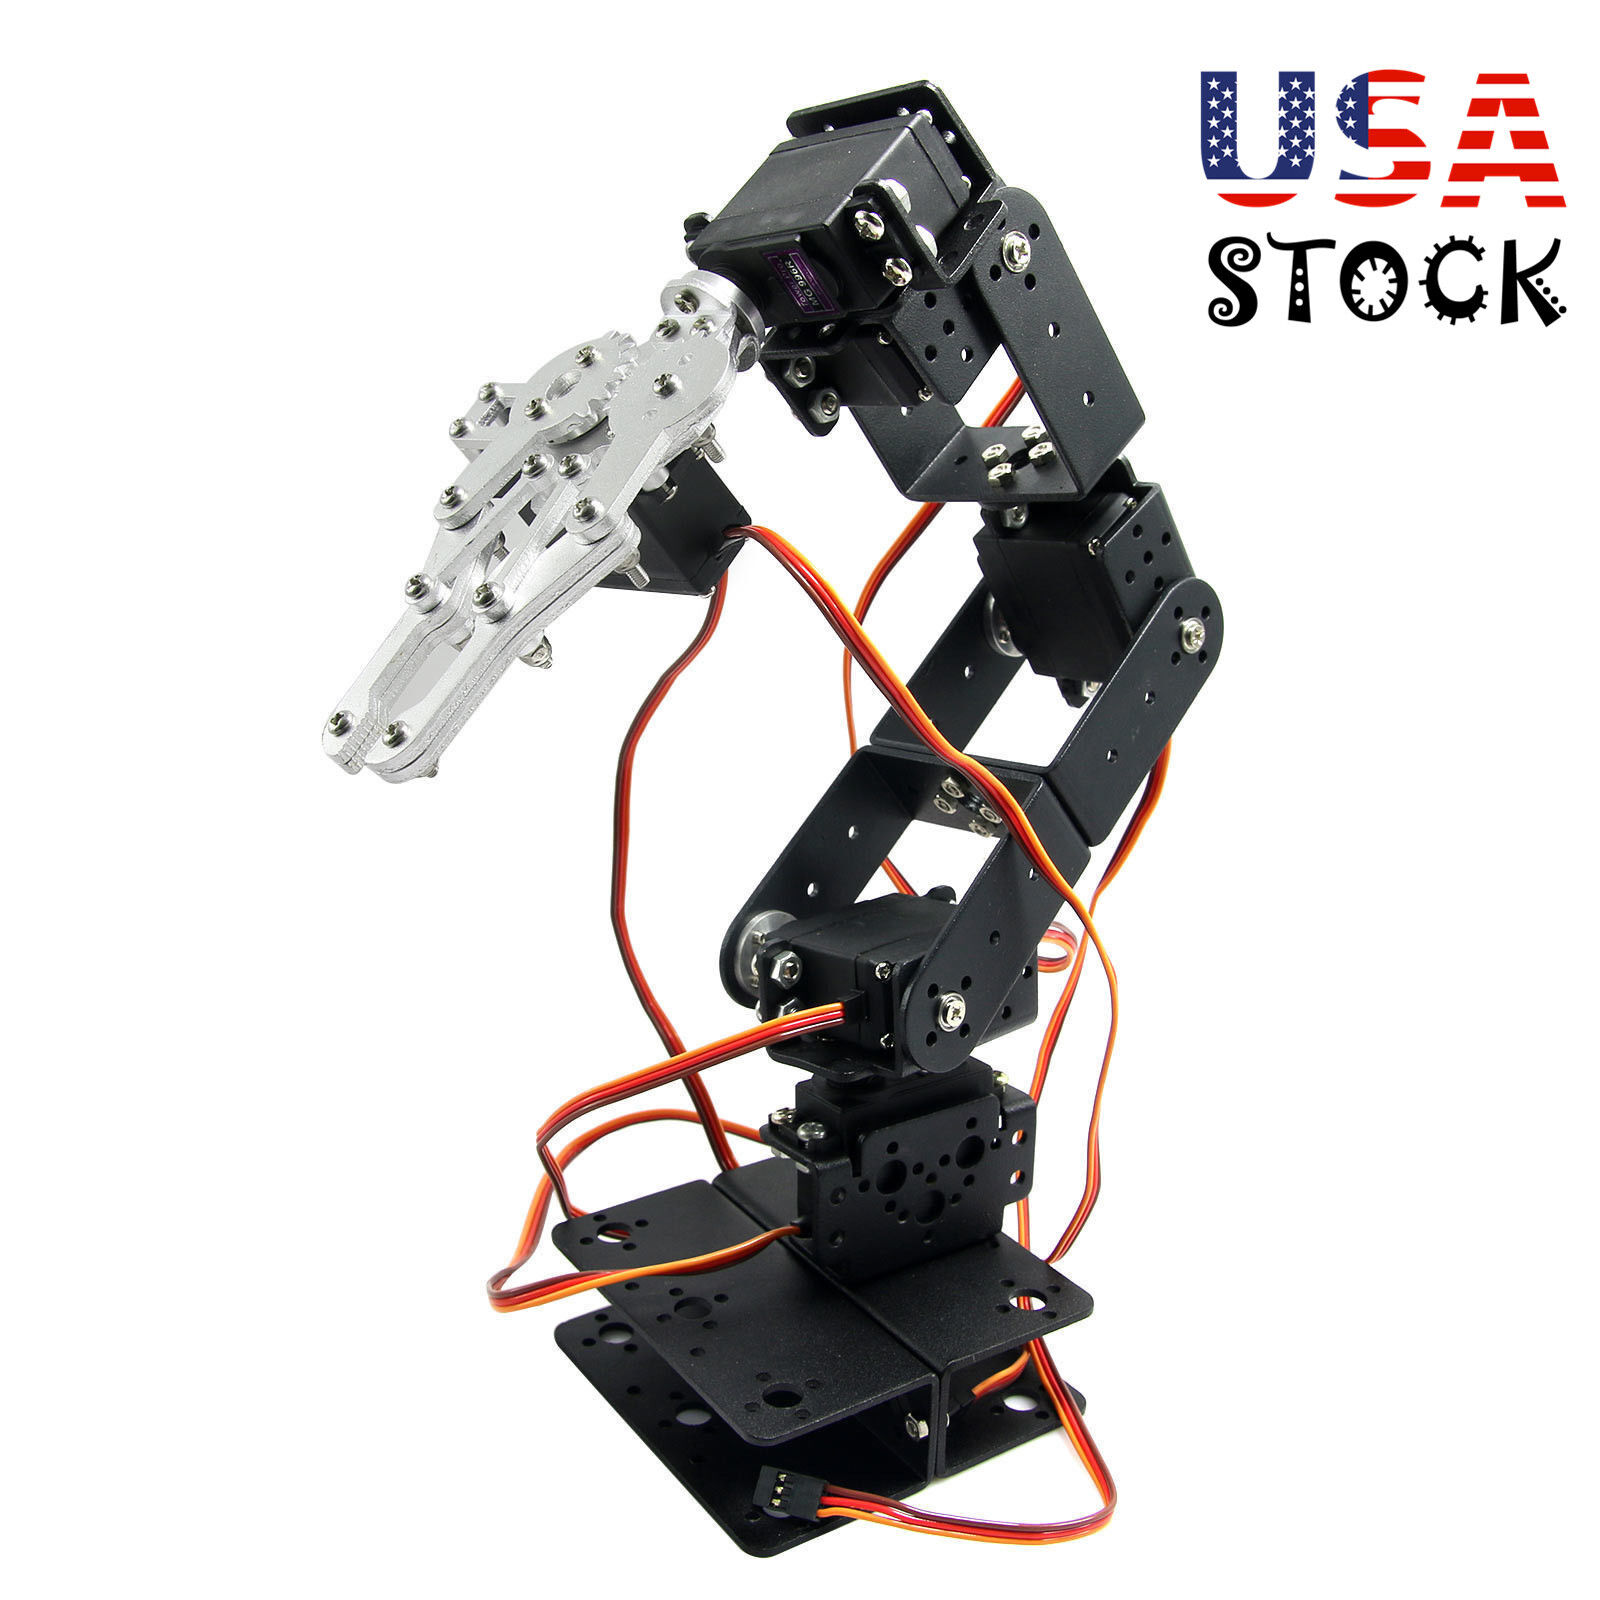 Alu Robot 6 DOF Arm Mechanical Robotic Arm Clamp Claw Mount Kit  USA